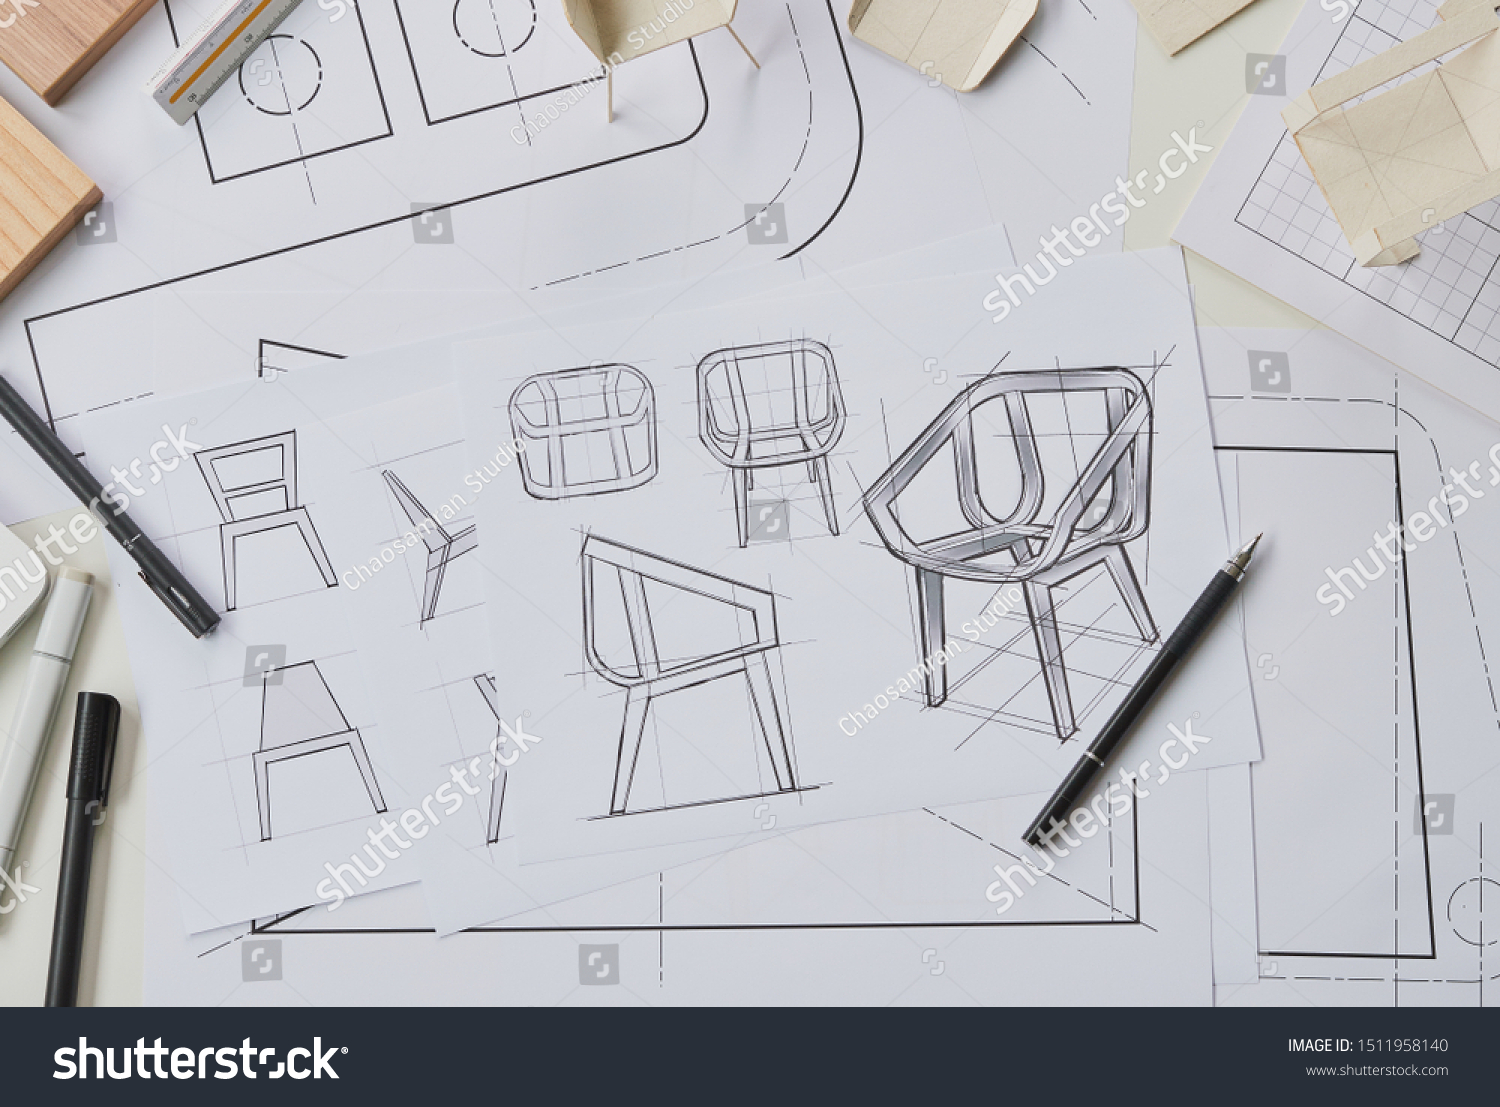 Designer Sketching Drawing Design Development Product Business